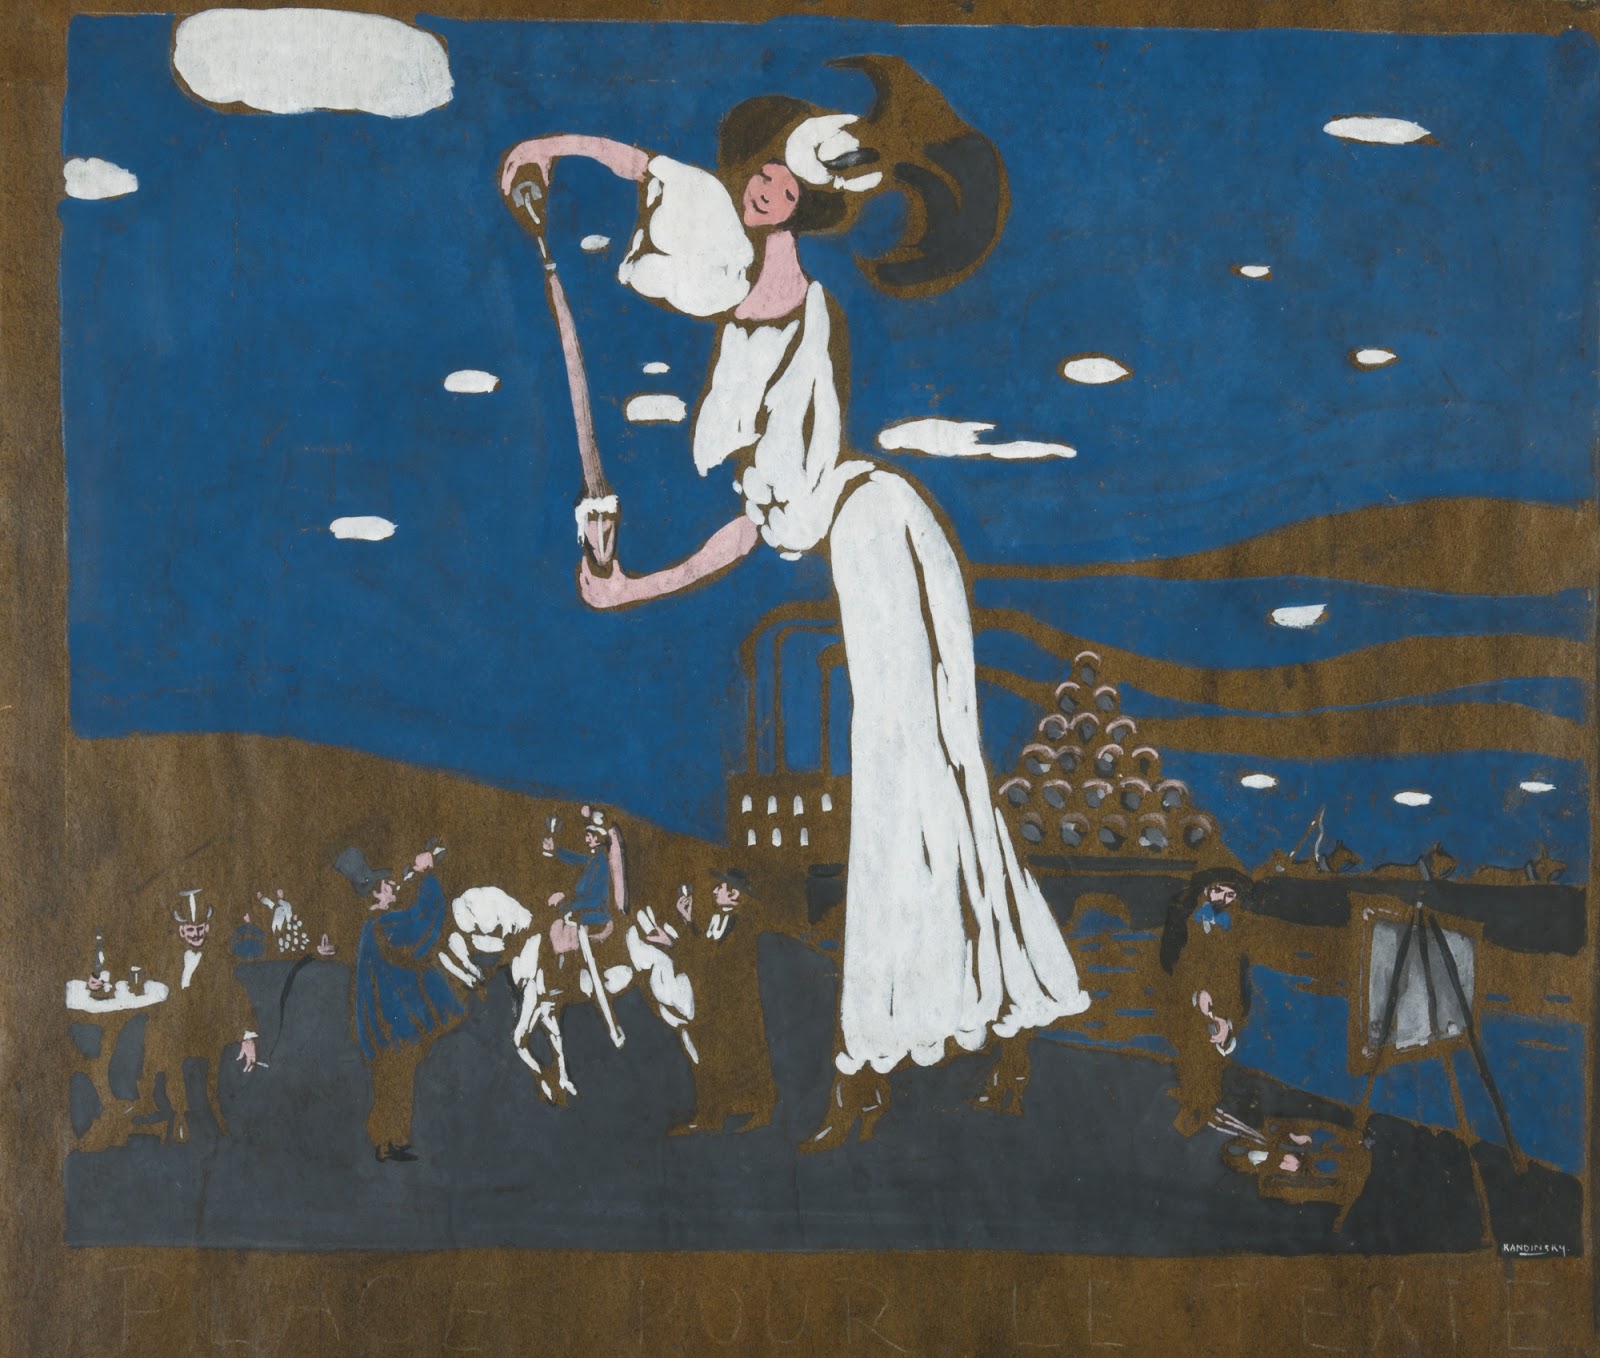 Wassily+Kandinsky-1866-1944 (361).jpg